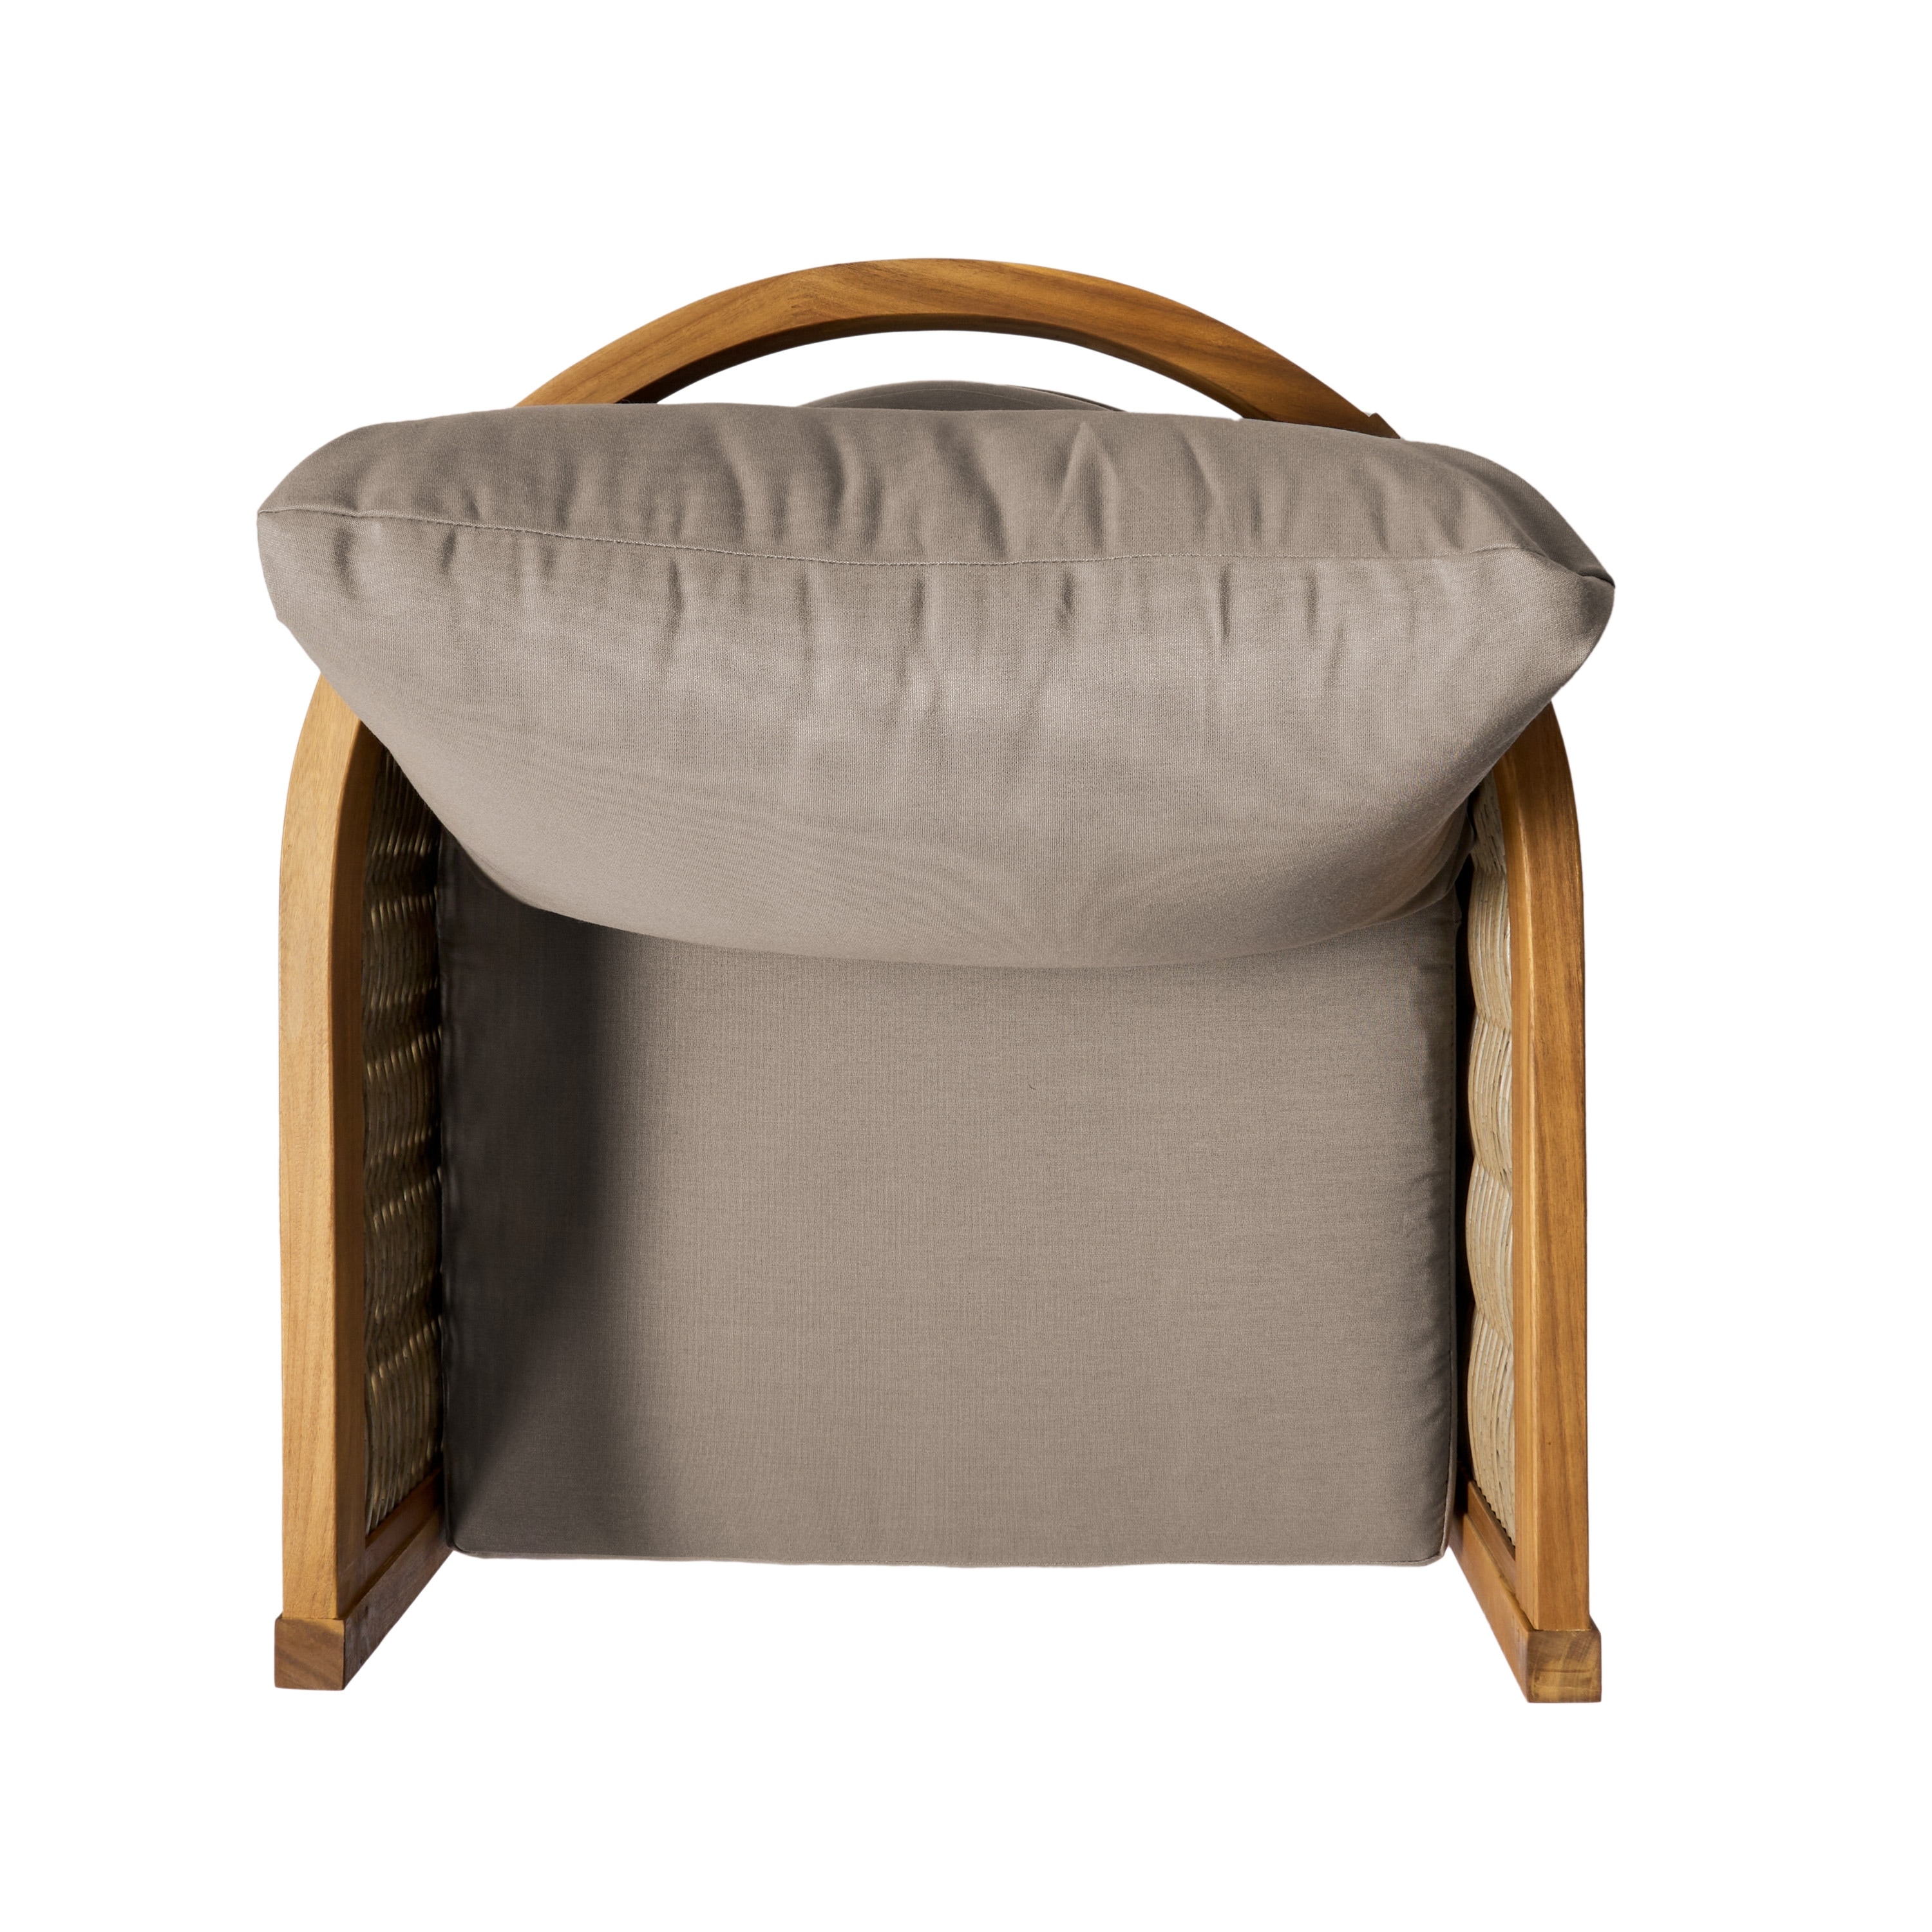 Burchett 2pk Outdoor Acacia Wood Club Chairs with Cushions - Teak/Brown/Beige - Christopher Knight Home